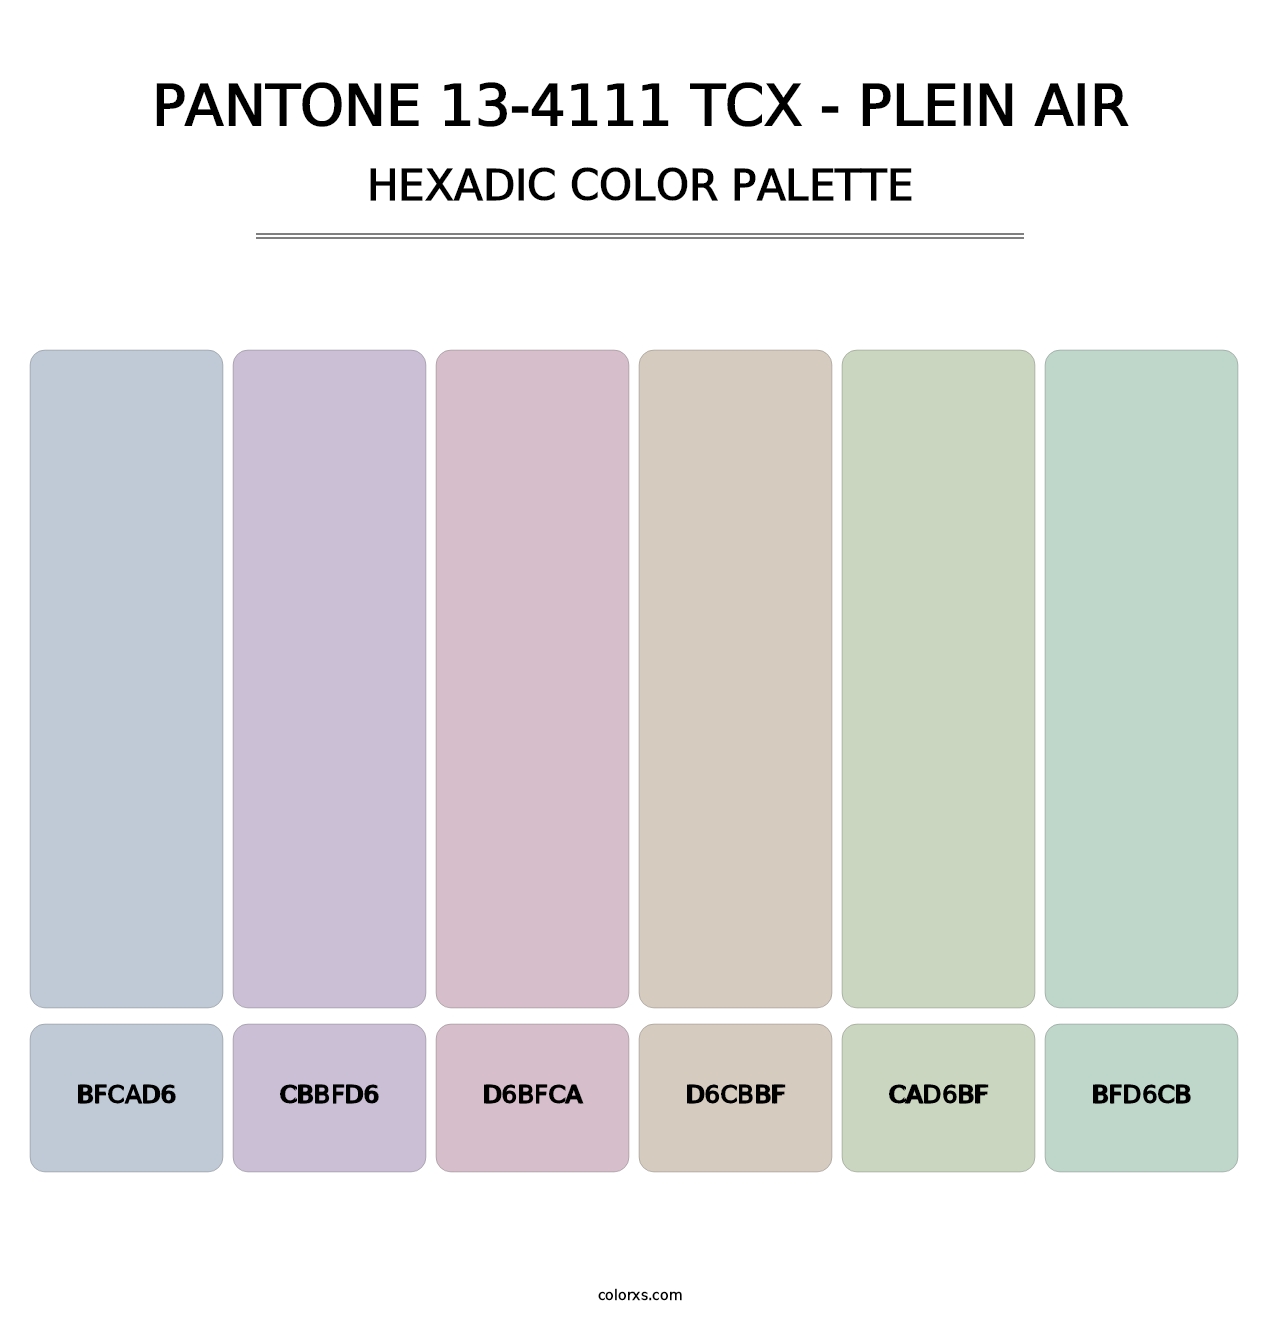 PANTONE 13-4111 TCX - Plein Air - Hexadic Color Palette